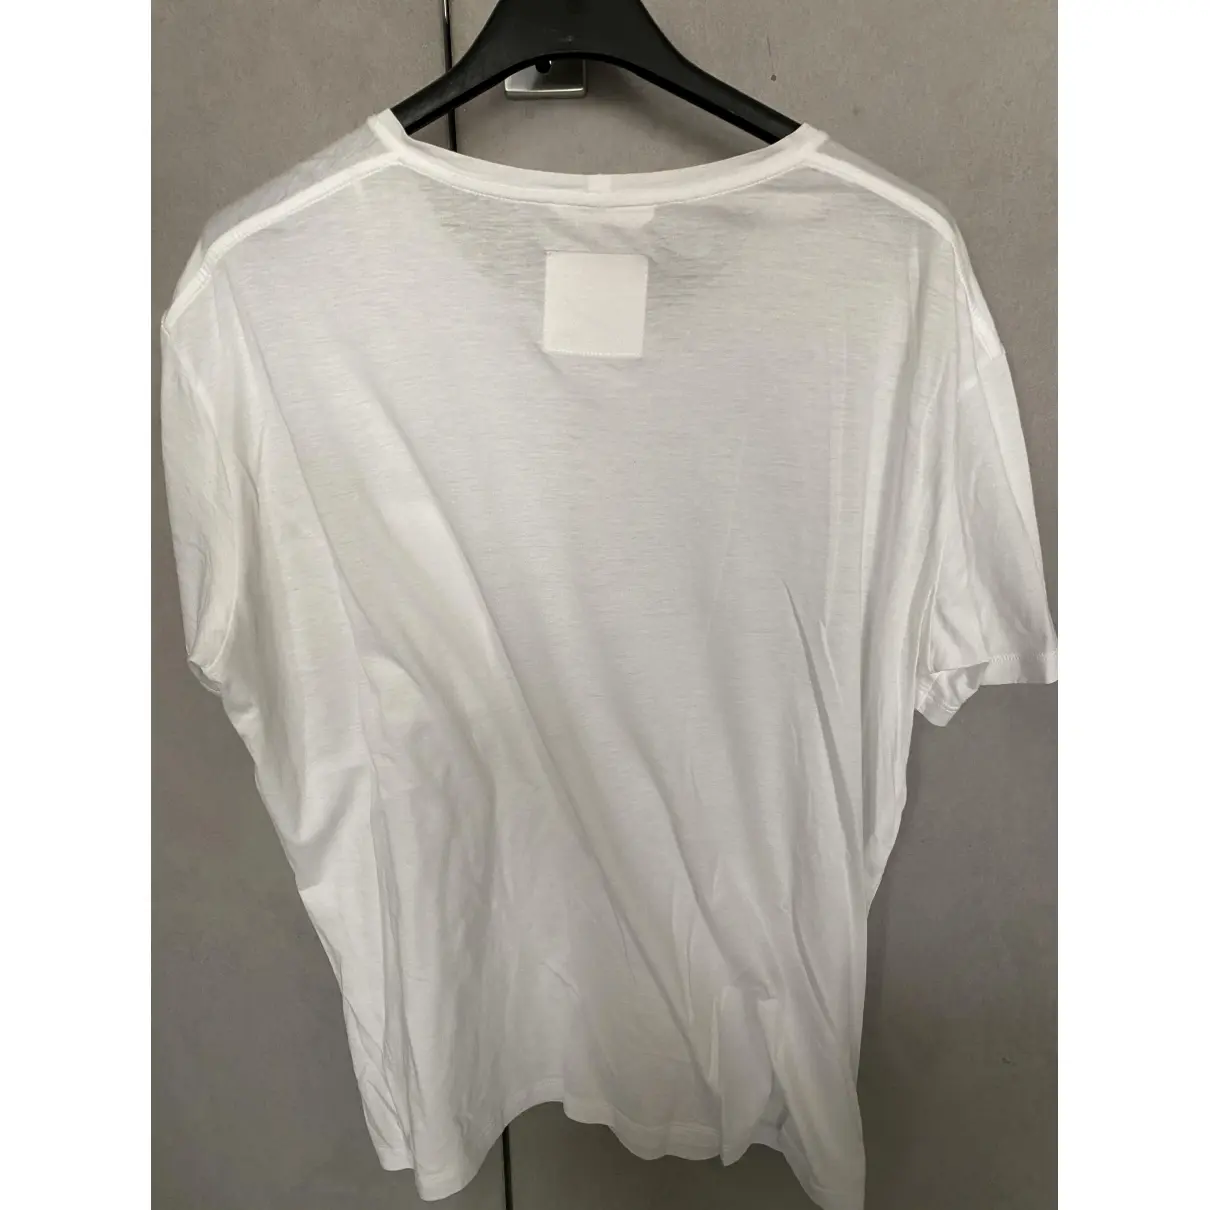 Buy Valentino Garavani White Cotton T-shirt online